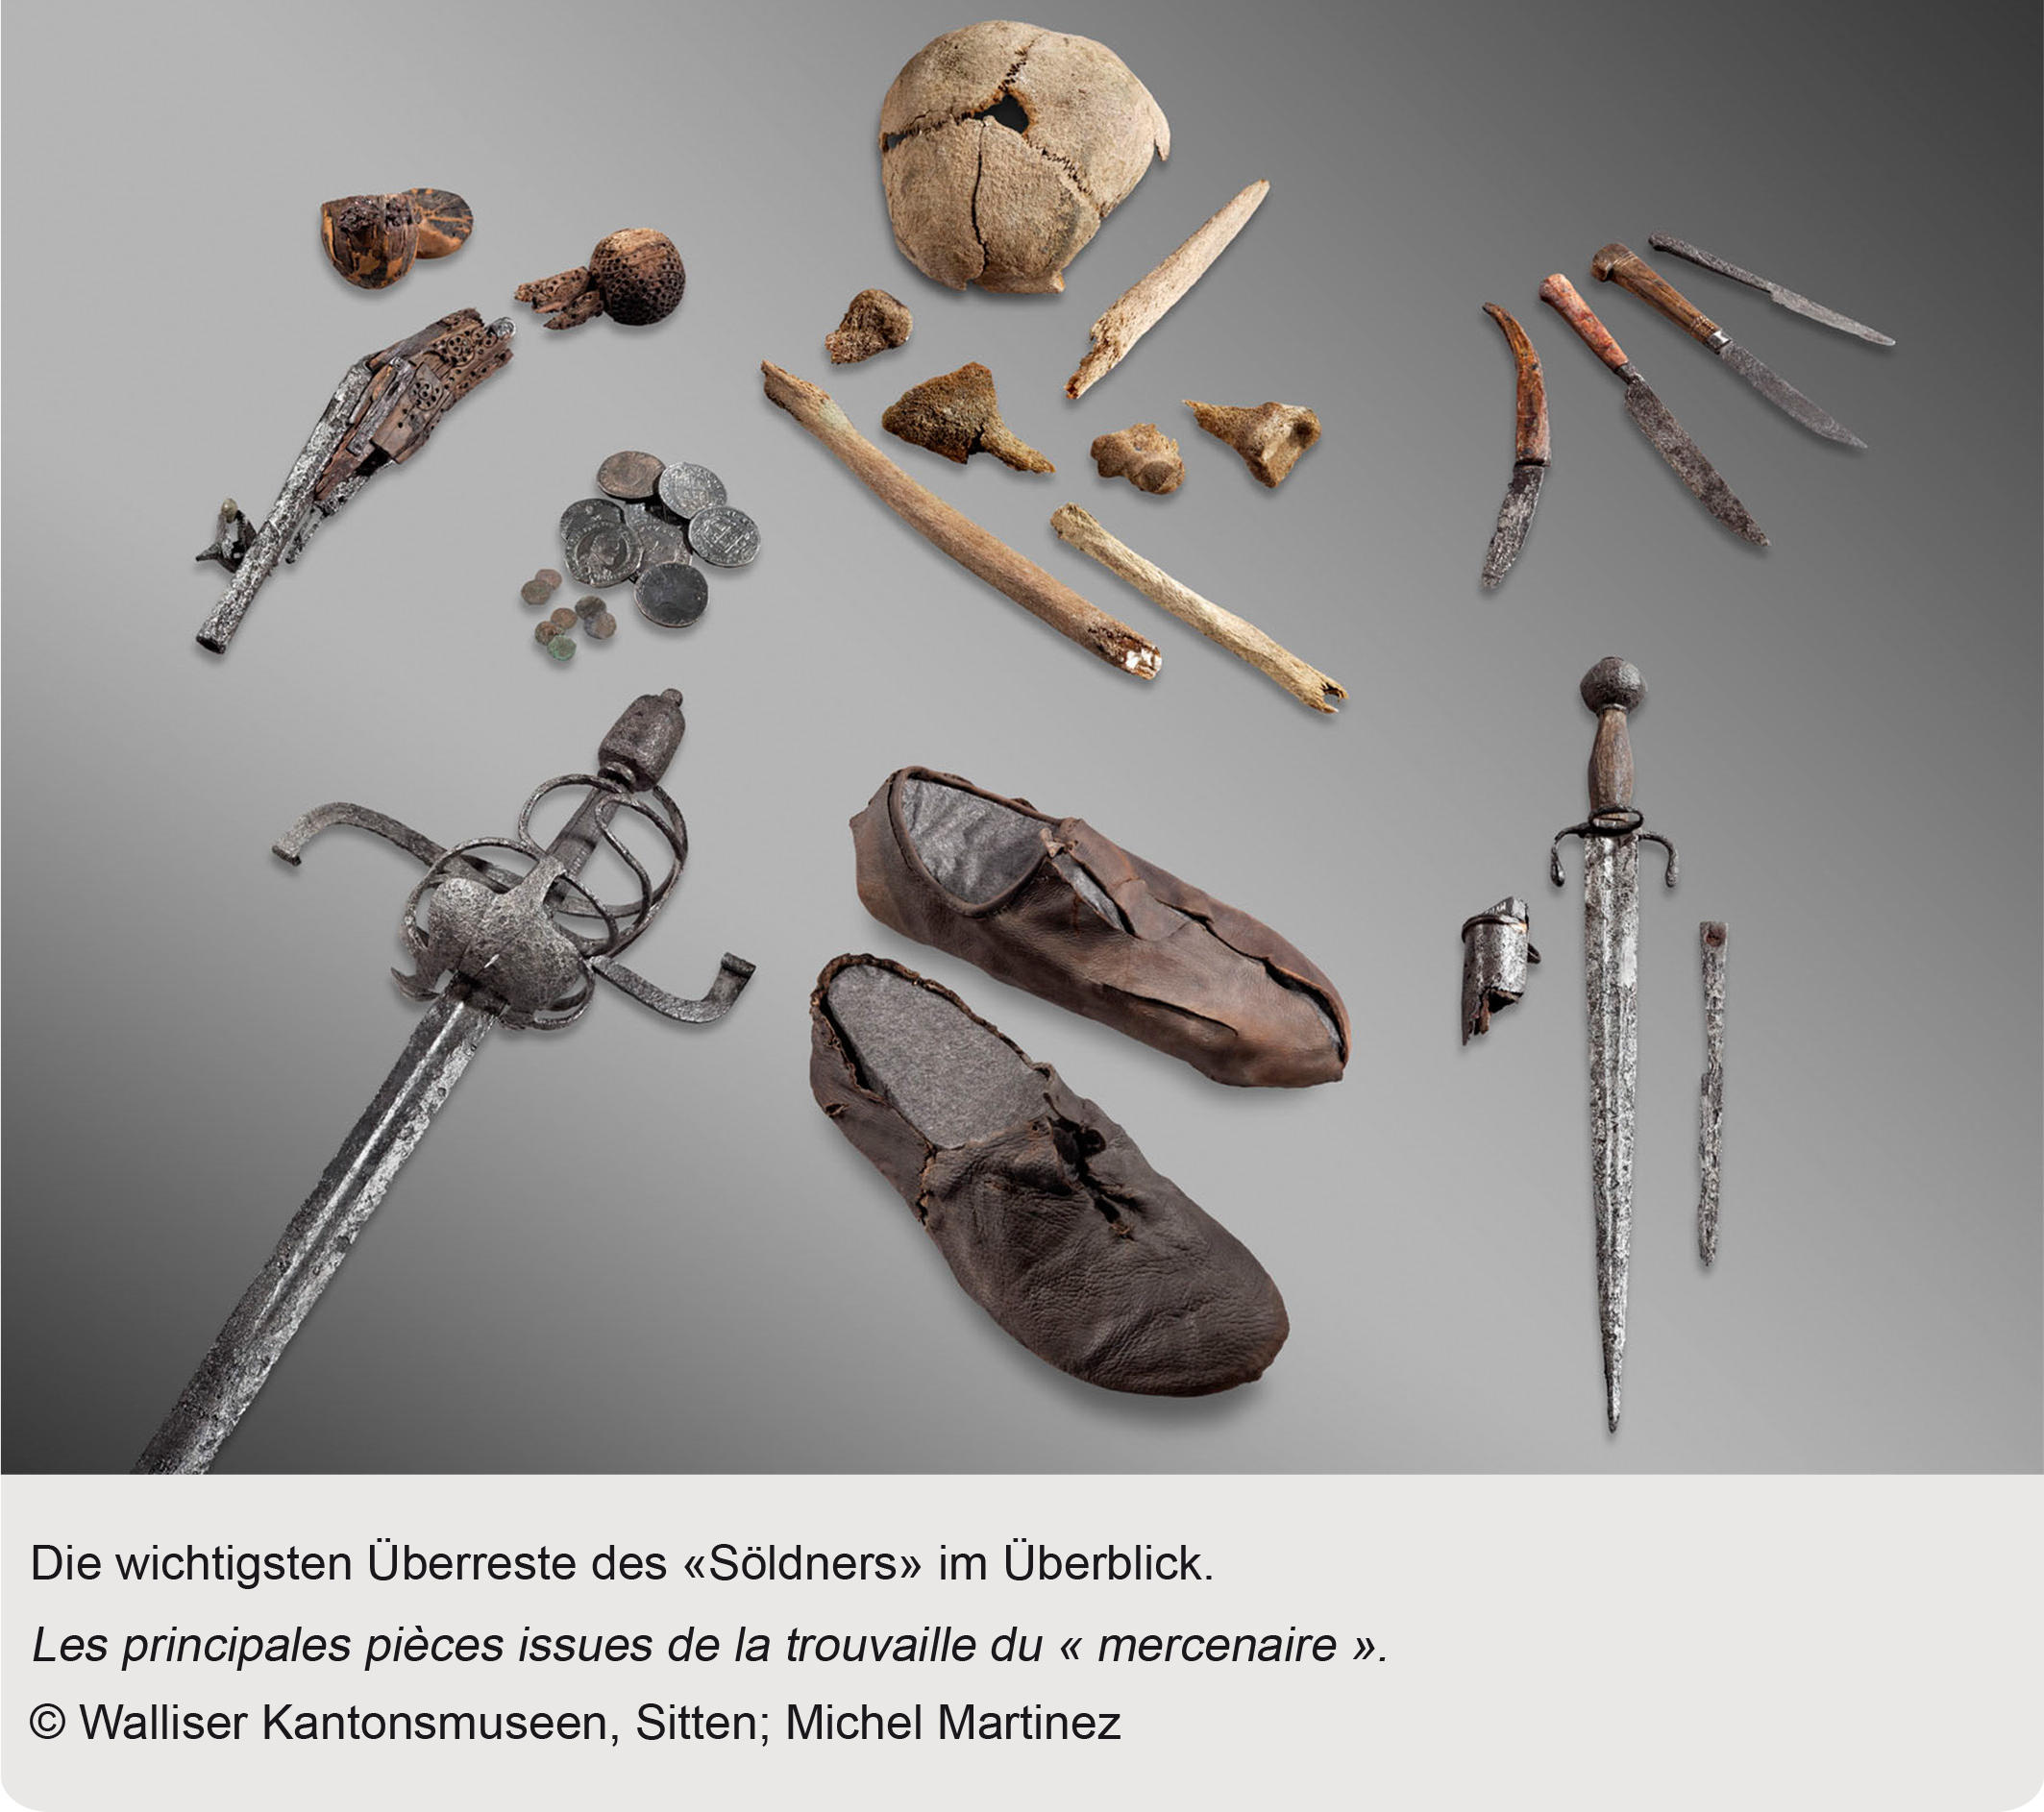 The bones and personal belongings of the Théodule Pass mercenary”